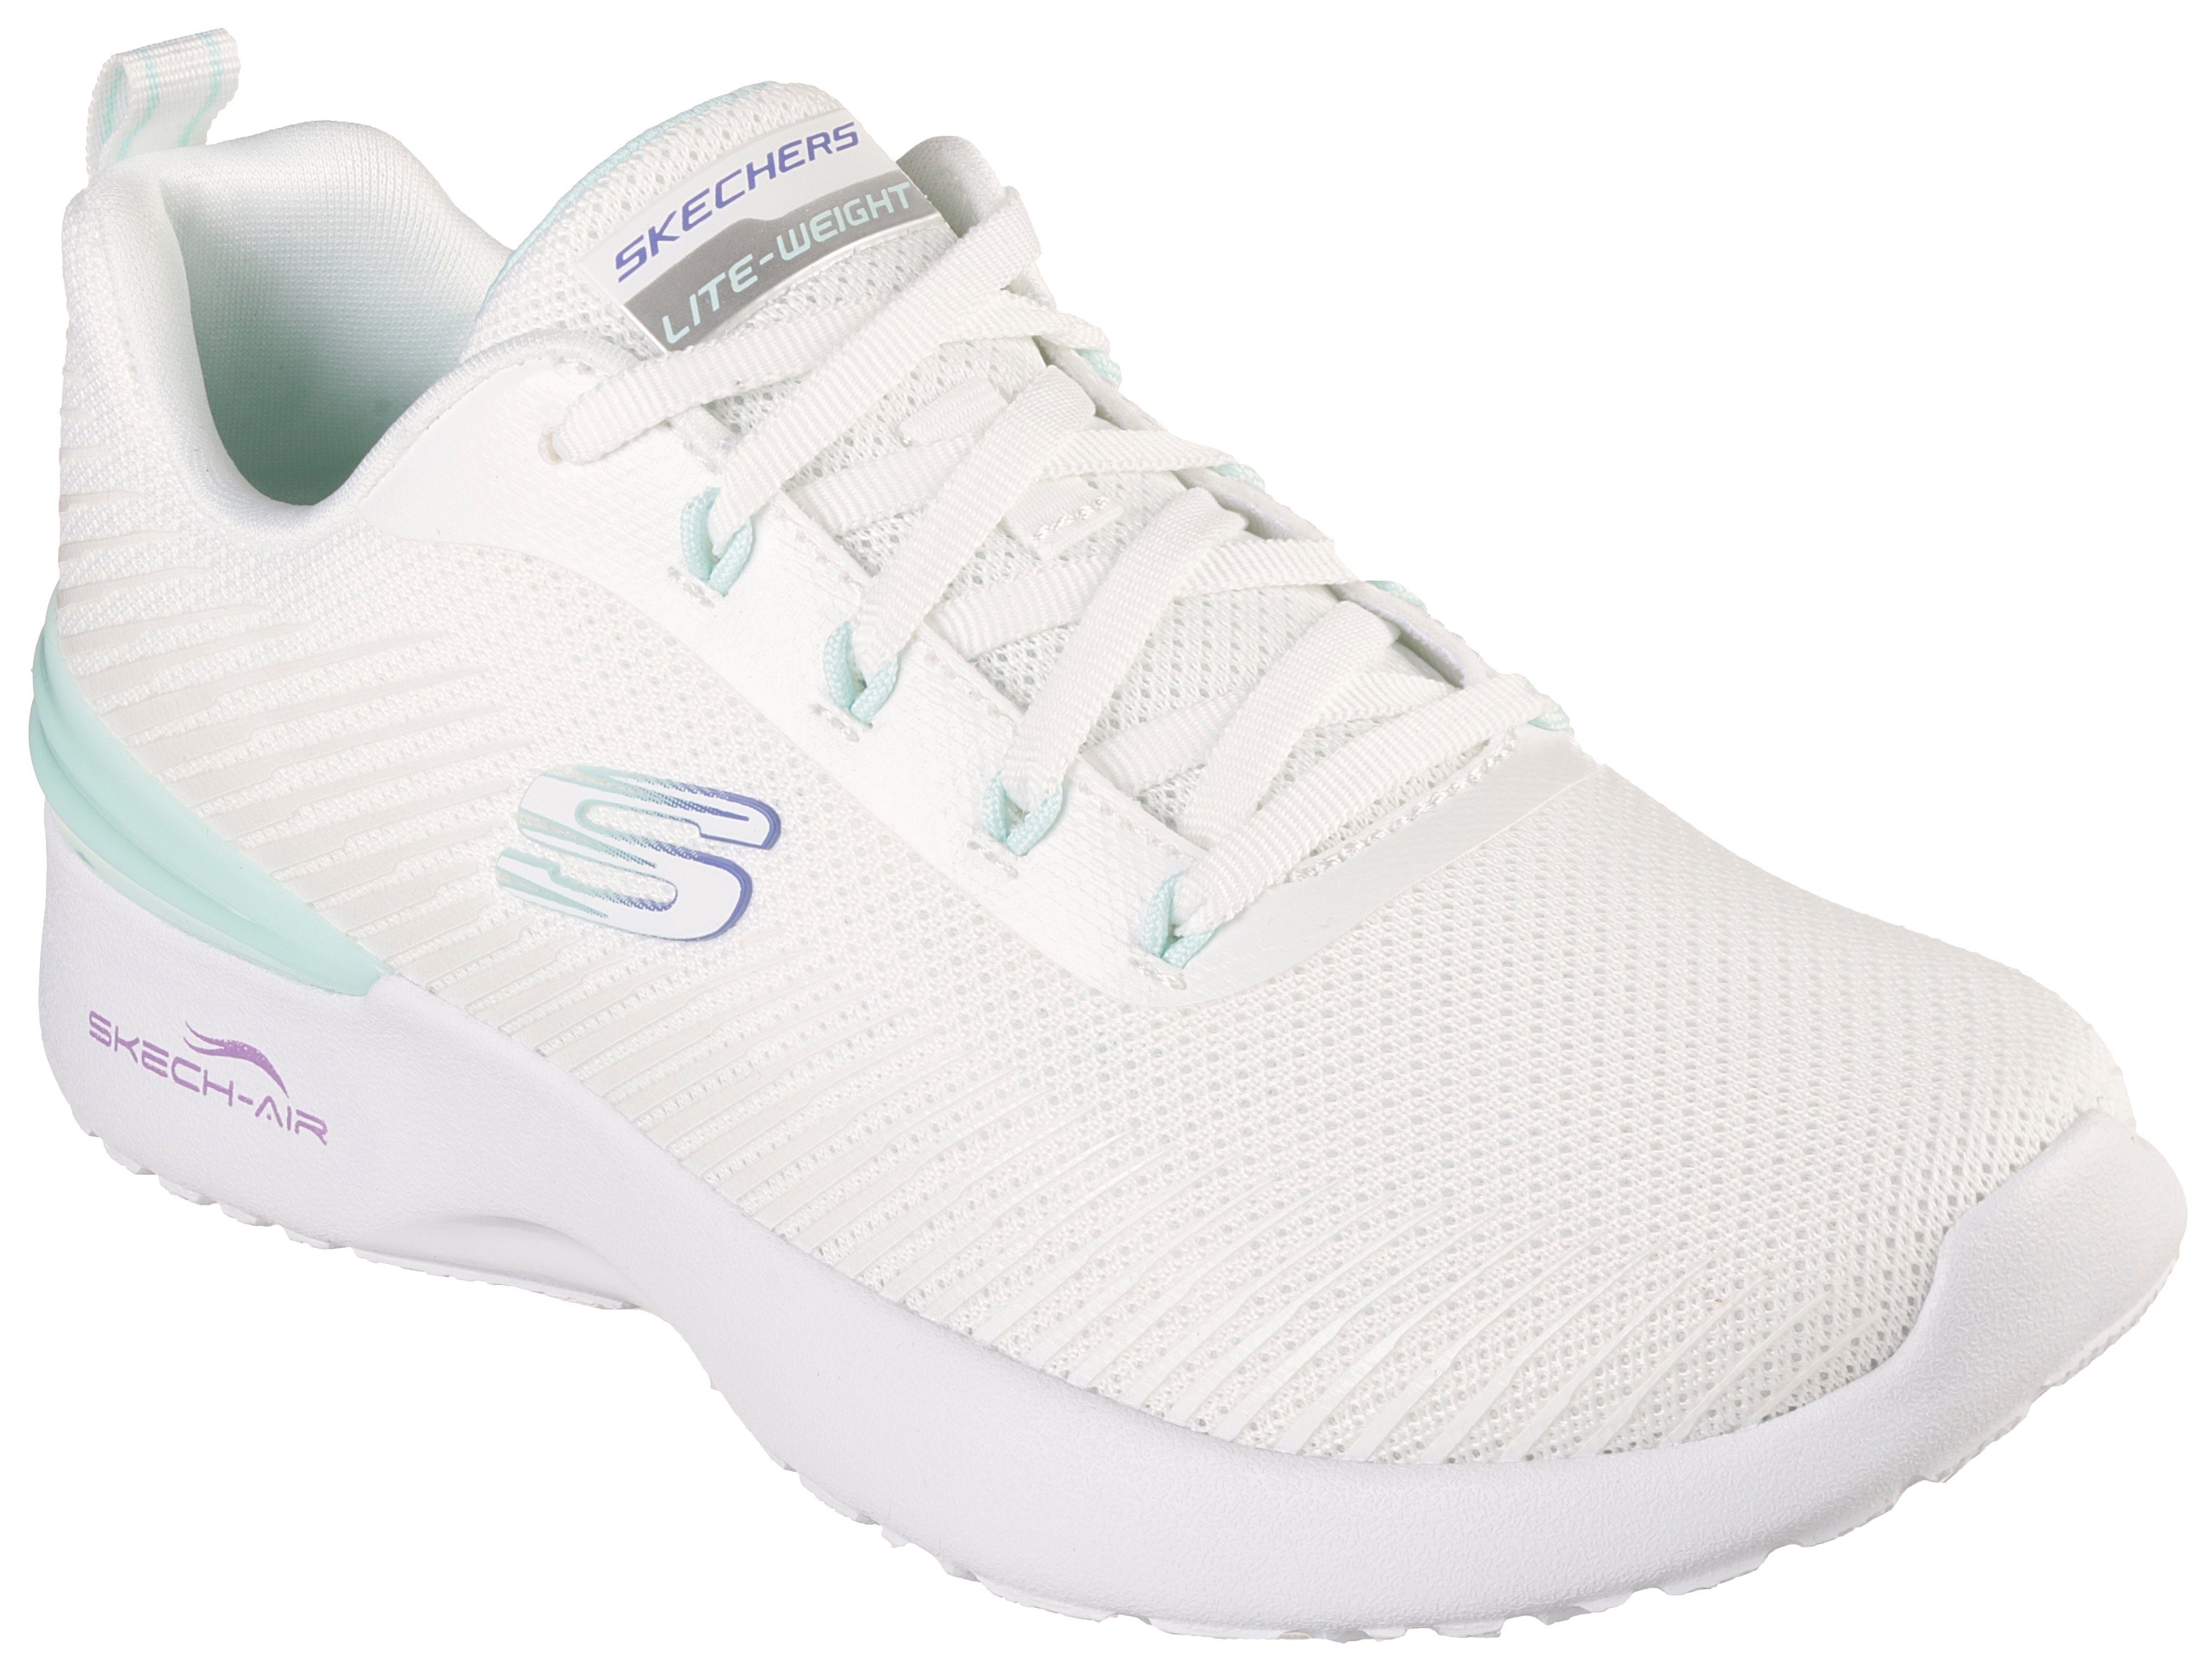 Skechers SKECH-AIR DYNAMIGHT Memory Ausstattung mit Foam Sneaker LUMINOSITY weiß-mint